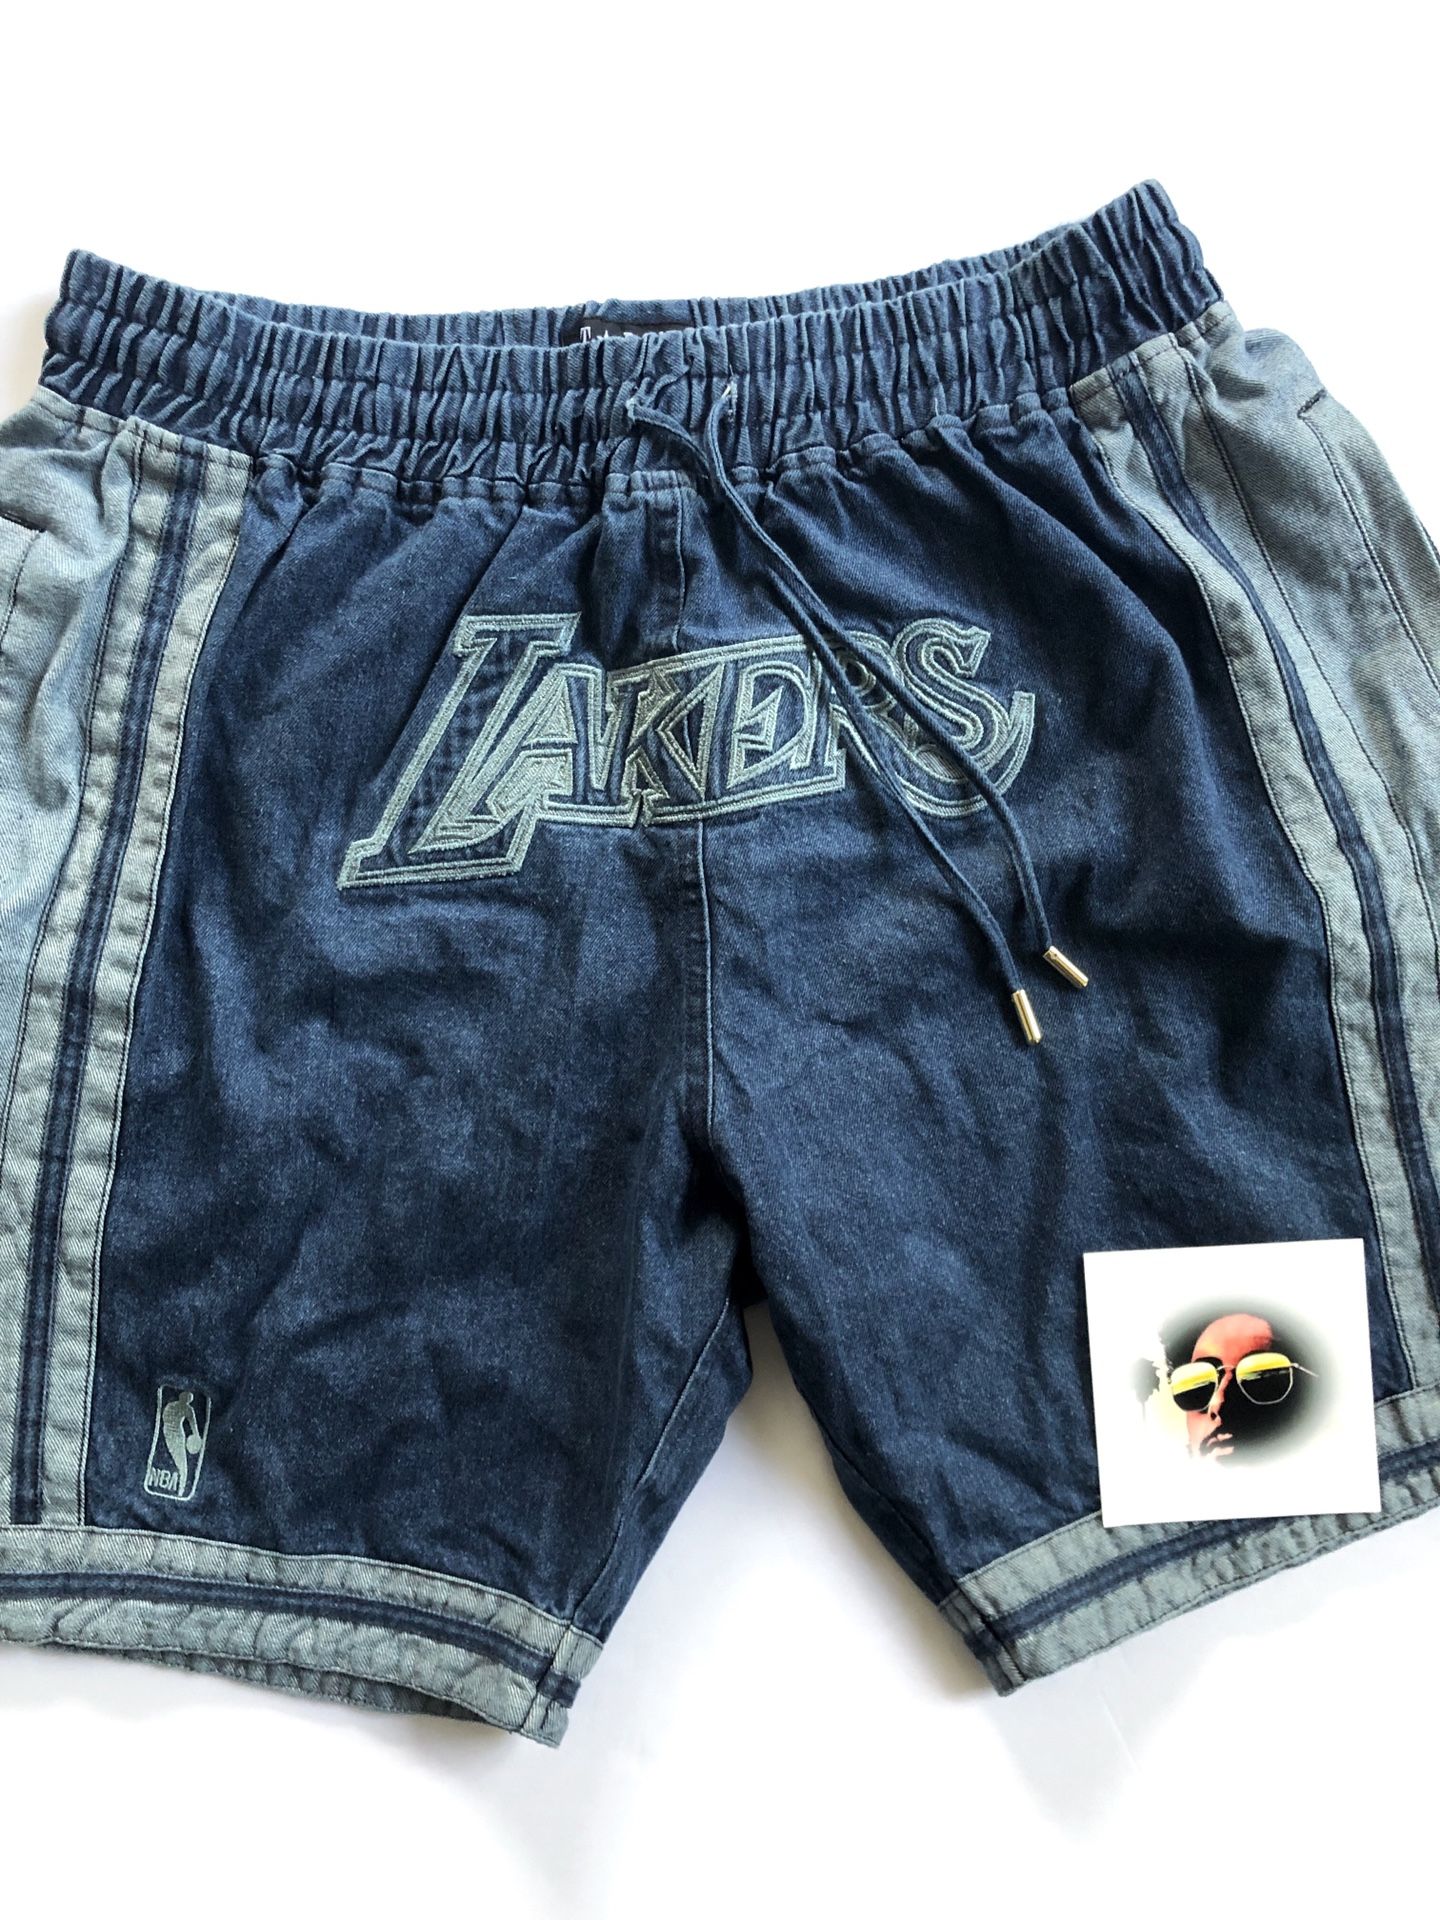 LA Lakers Denim Jean Shorts w/ Pockets - Mens XL